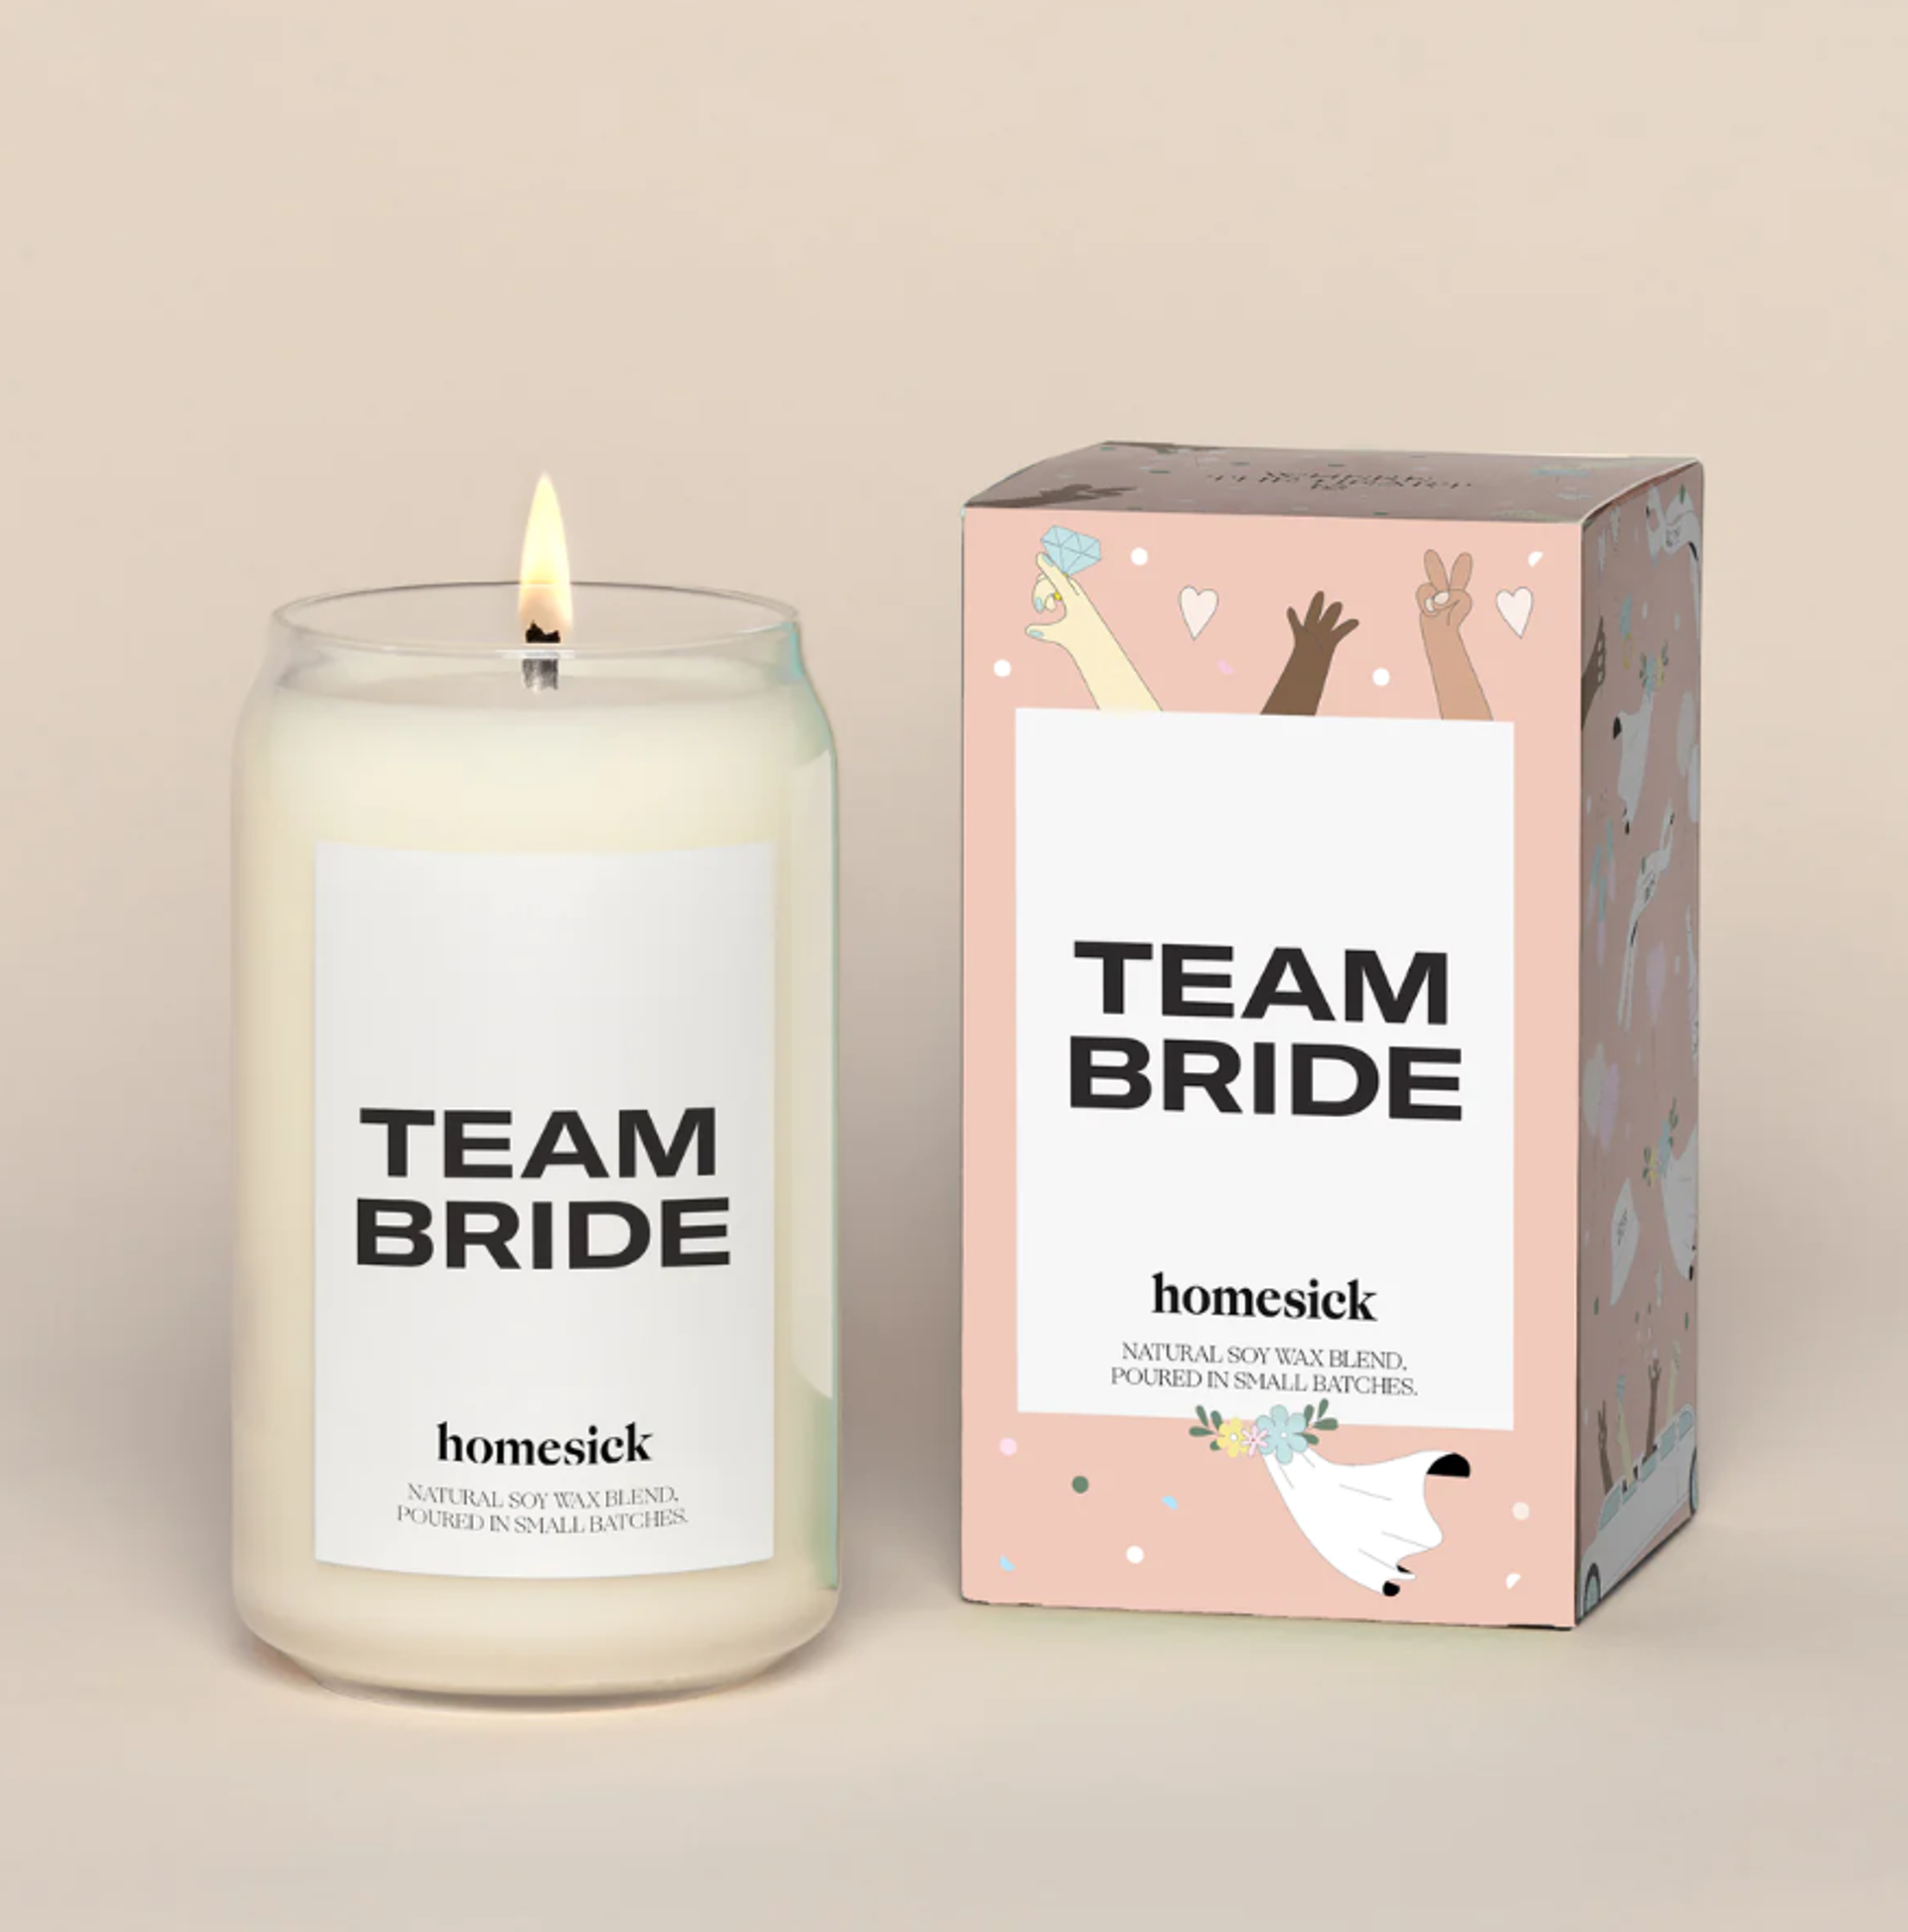 Team Bride Candle by Chauvet Arts